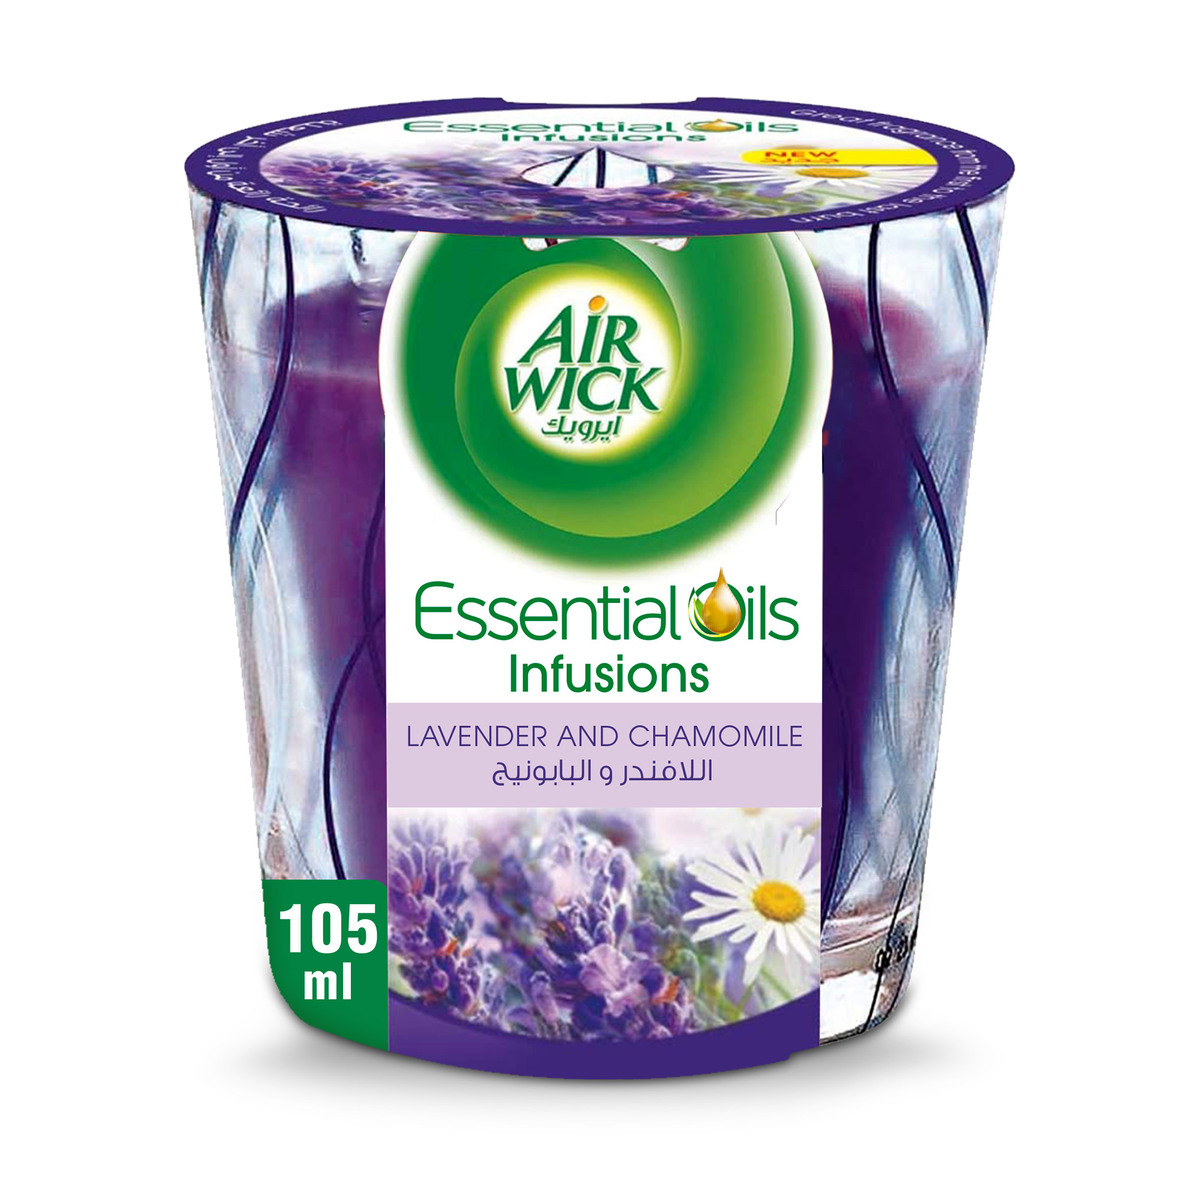 Airwick Lavender & Camomile Candle 105 ml